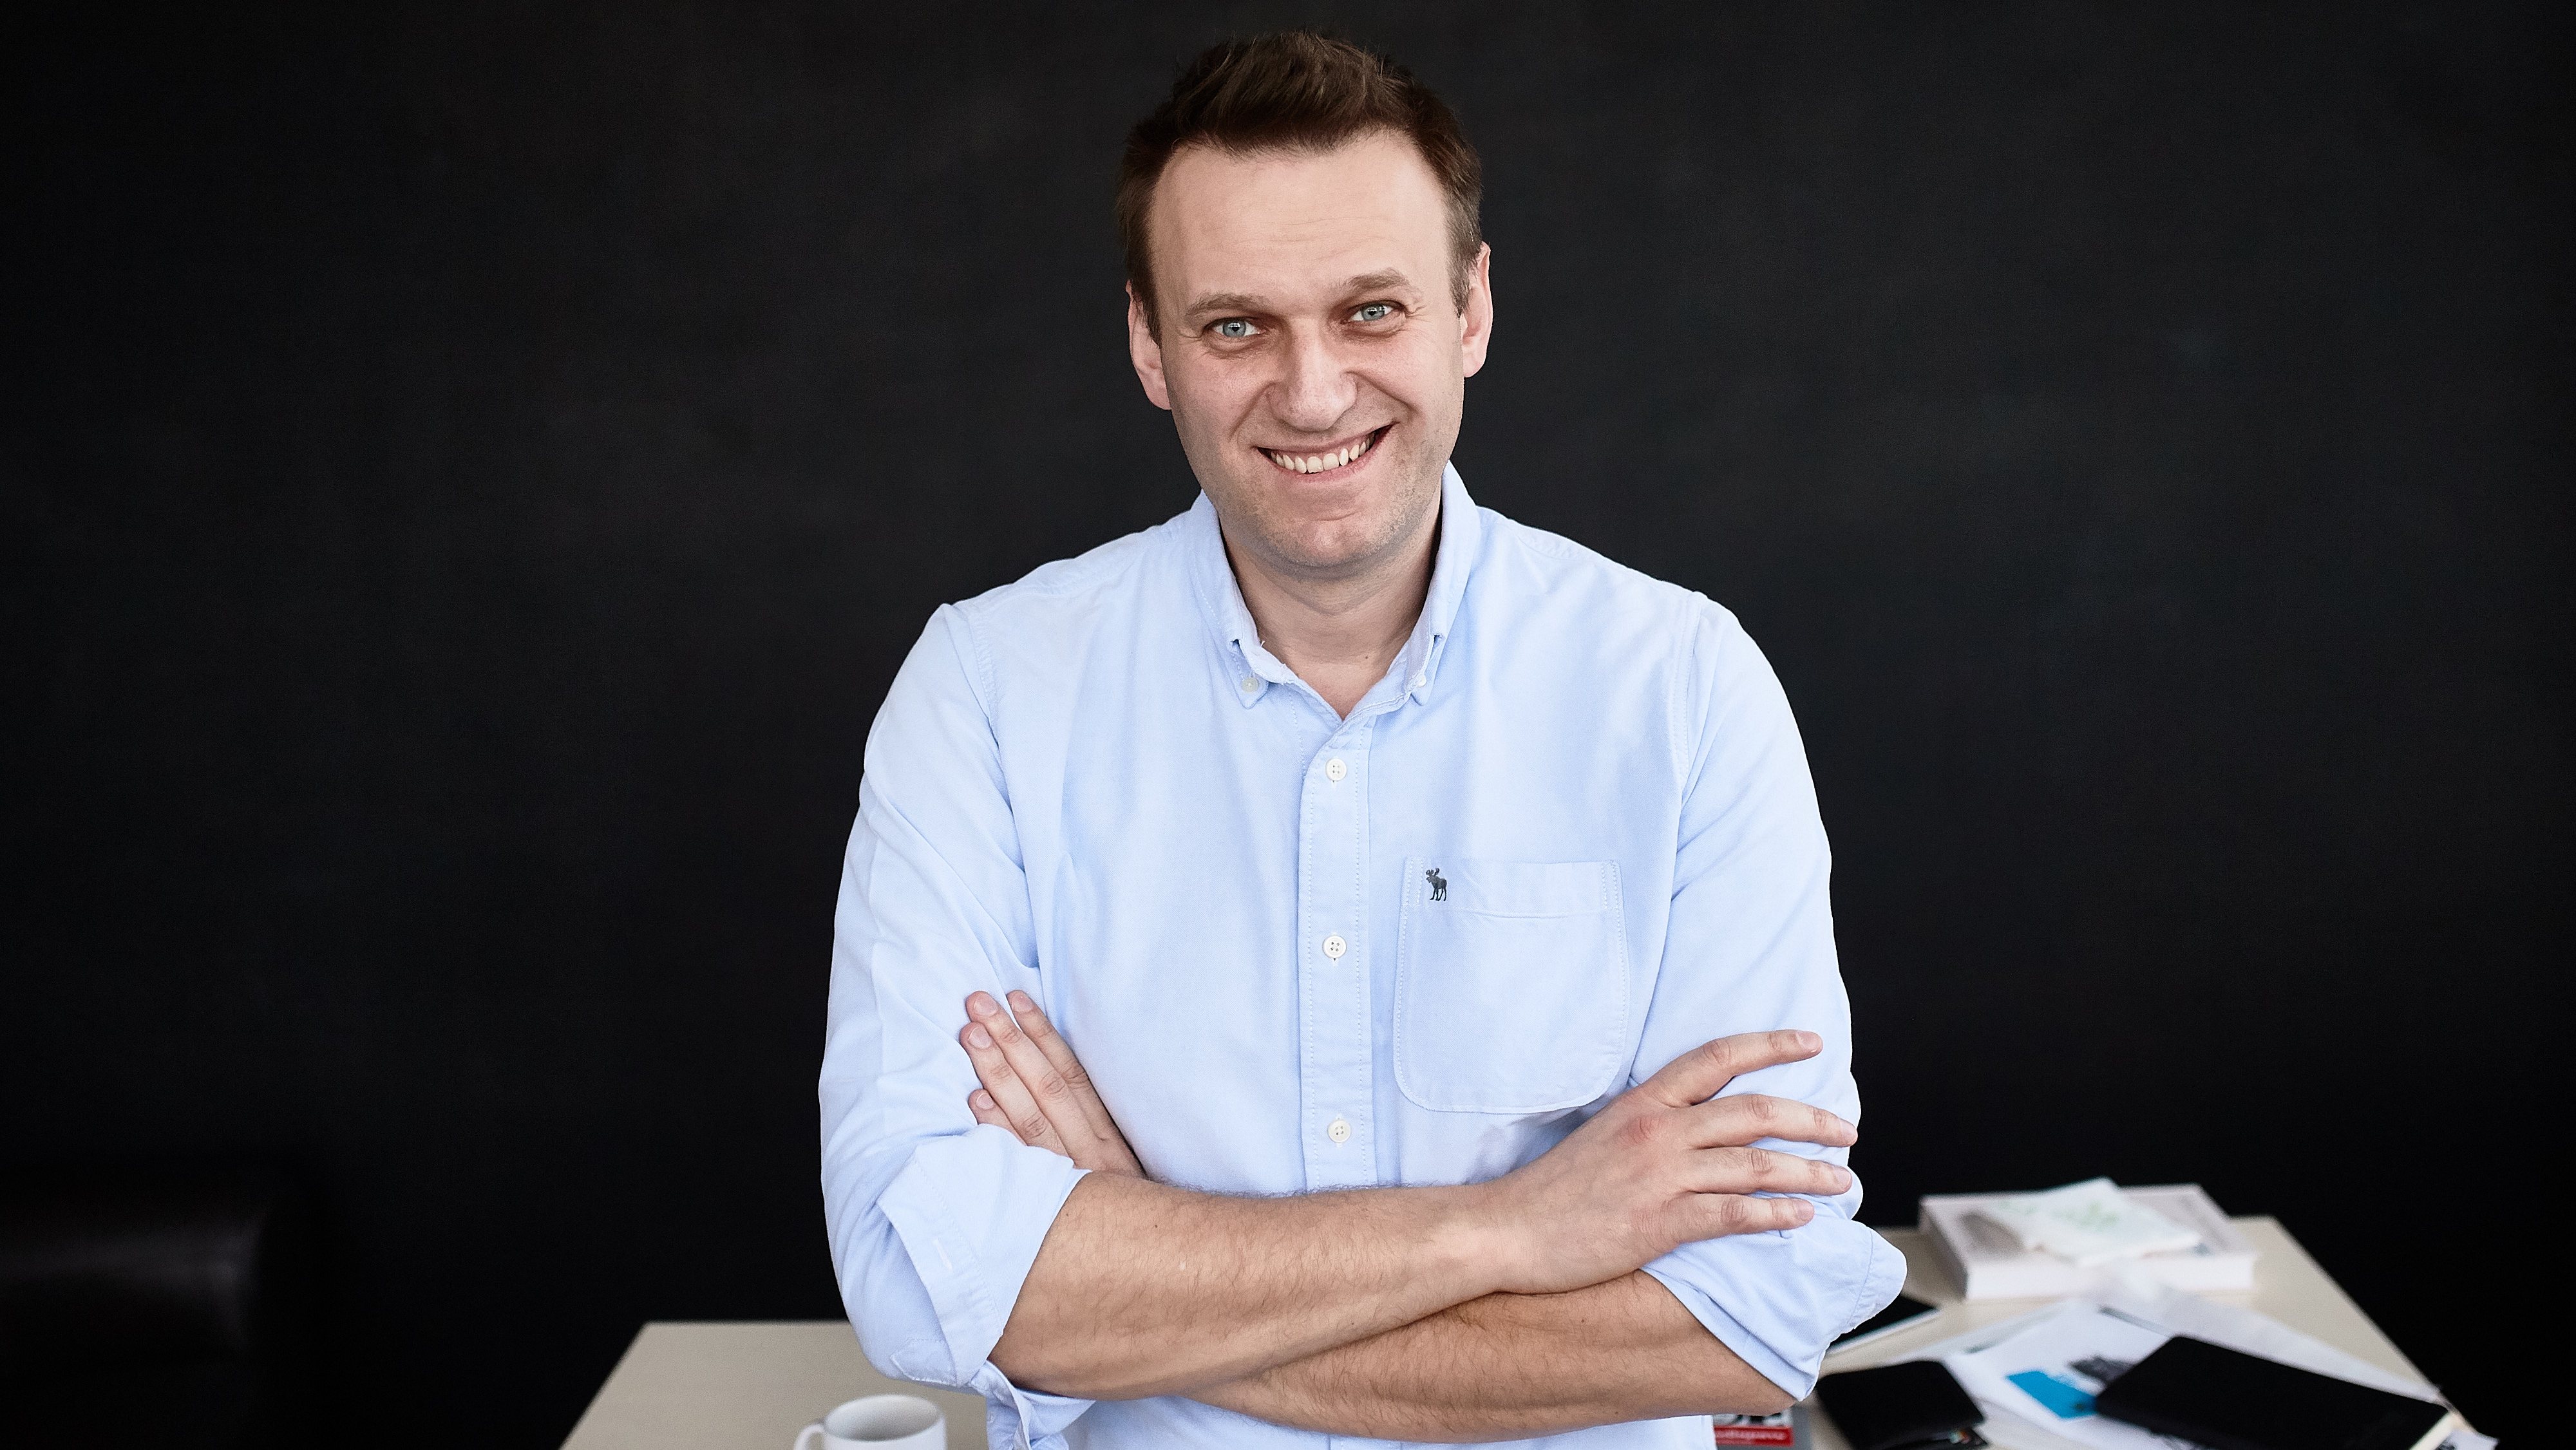 Russian politician Alexey Navalny